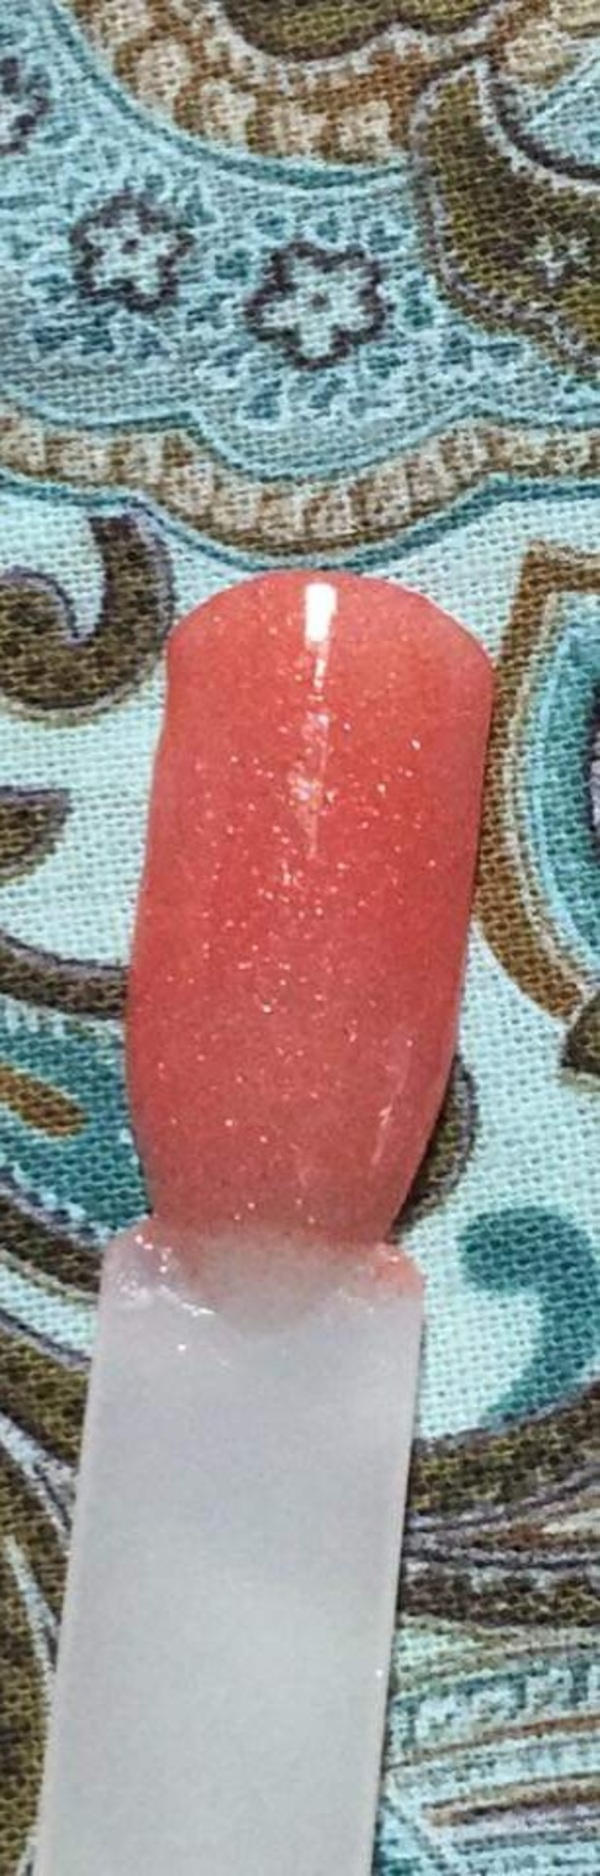 Nail polish swatch / manicure of shade Revel Reece